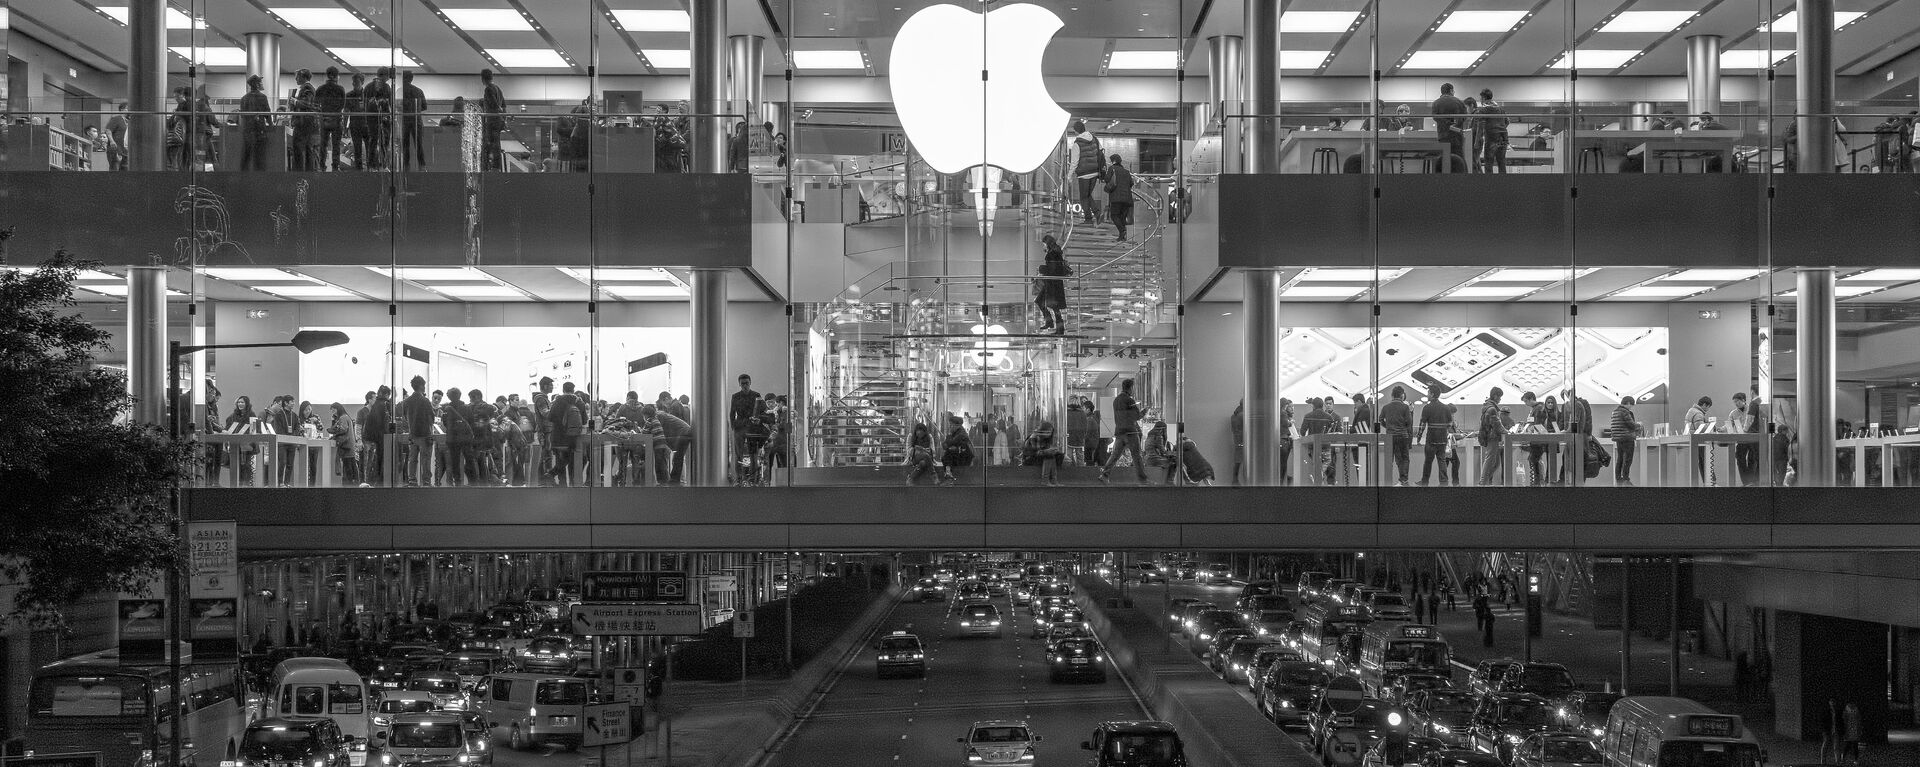 Una tienda de Apple - Sputnik Mundo, 1920, 29.12.2020